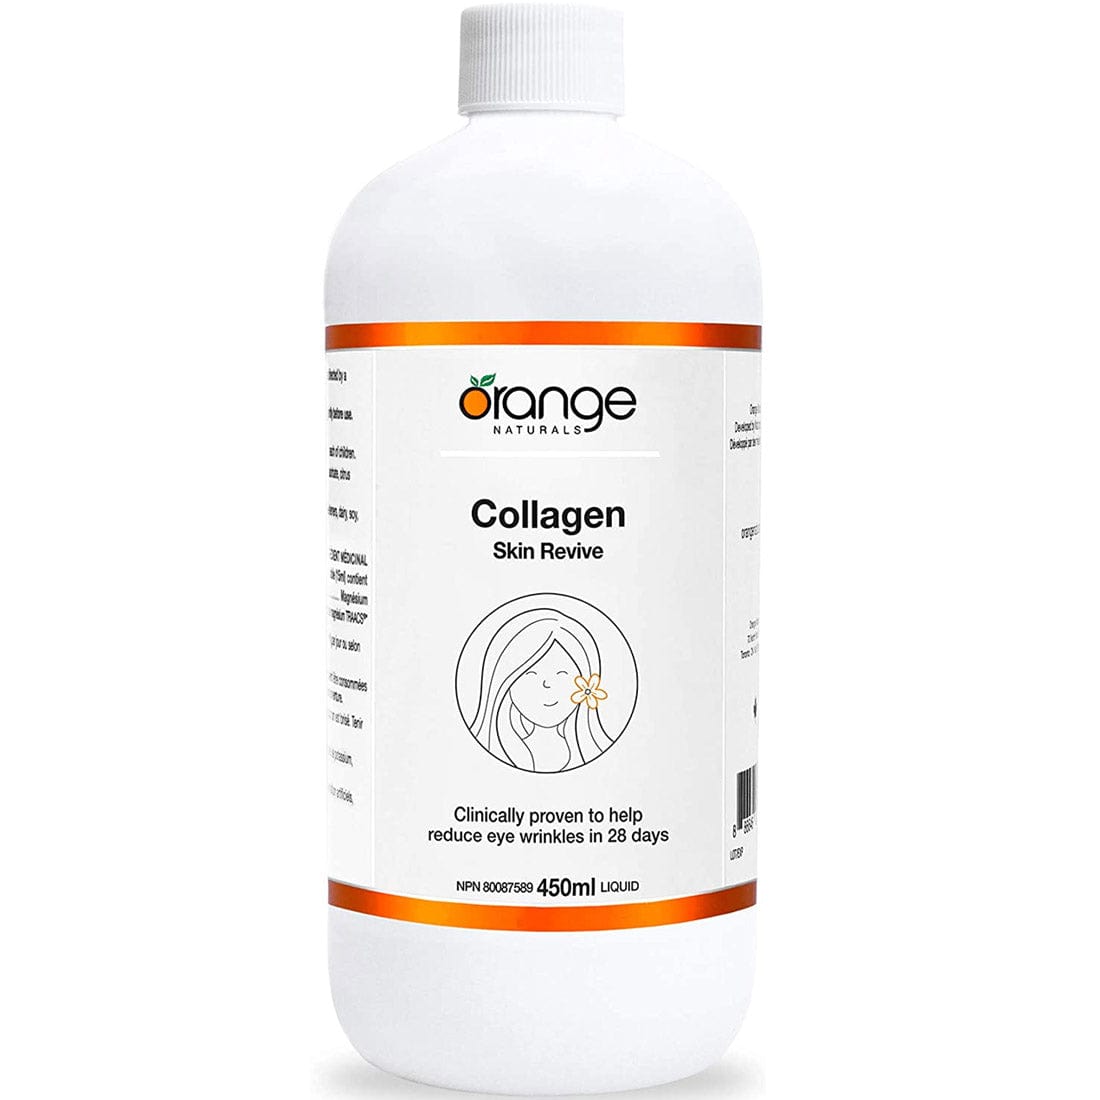 Orange Naturals Collagen Skin Revive Liquid, 450ml